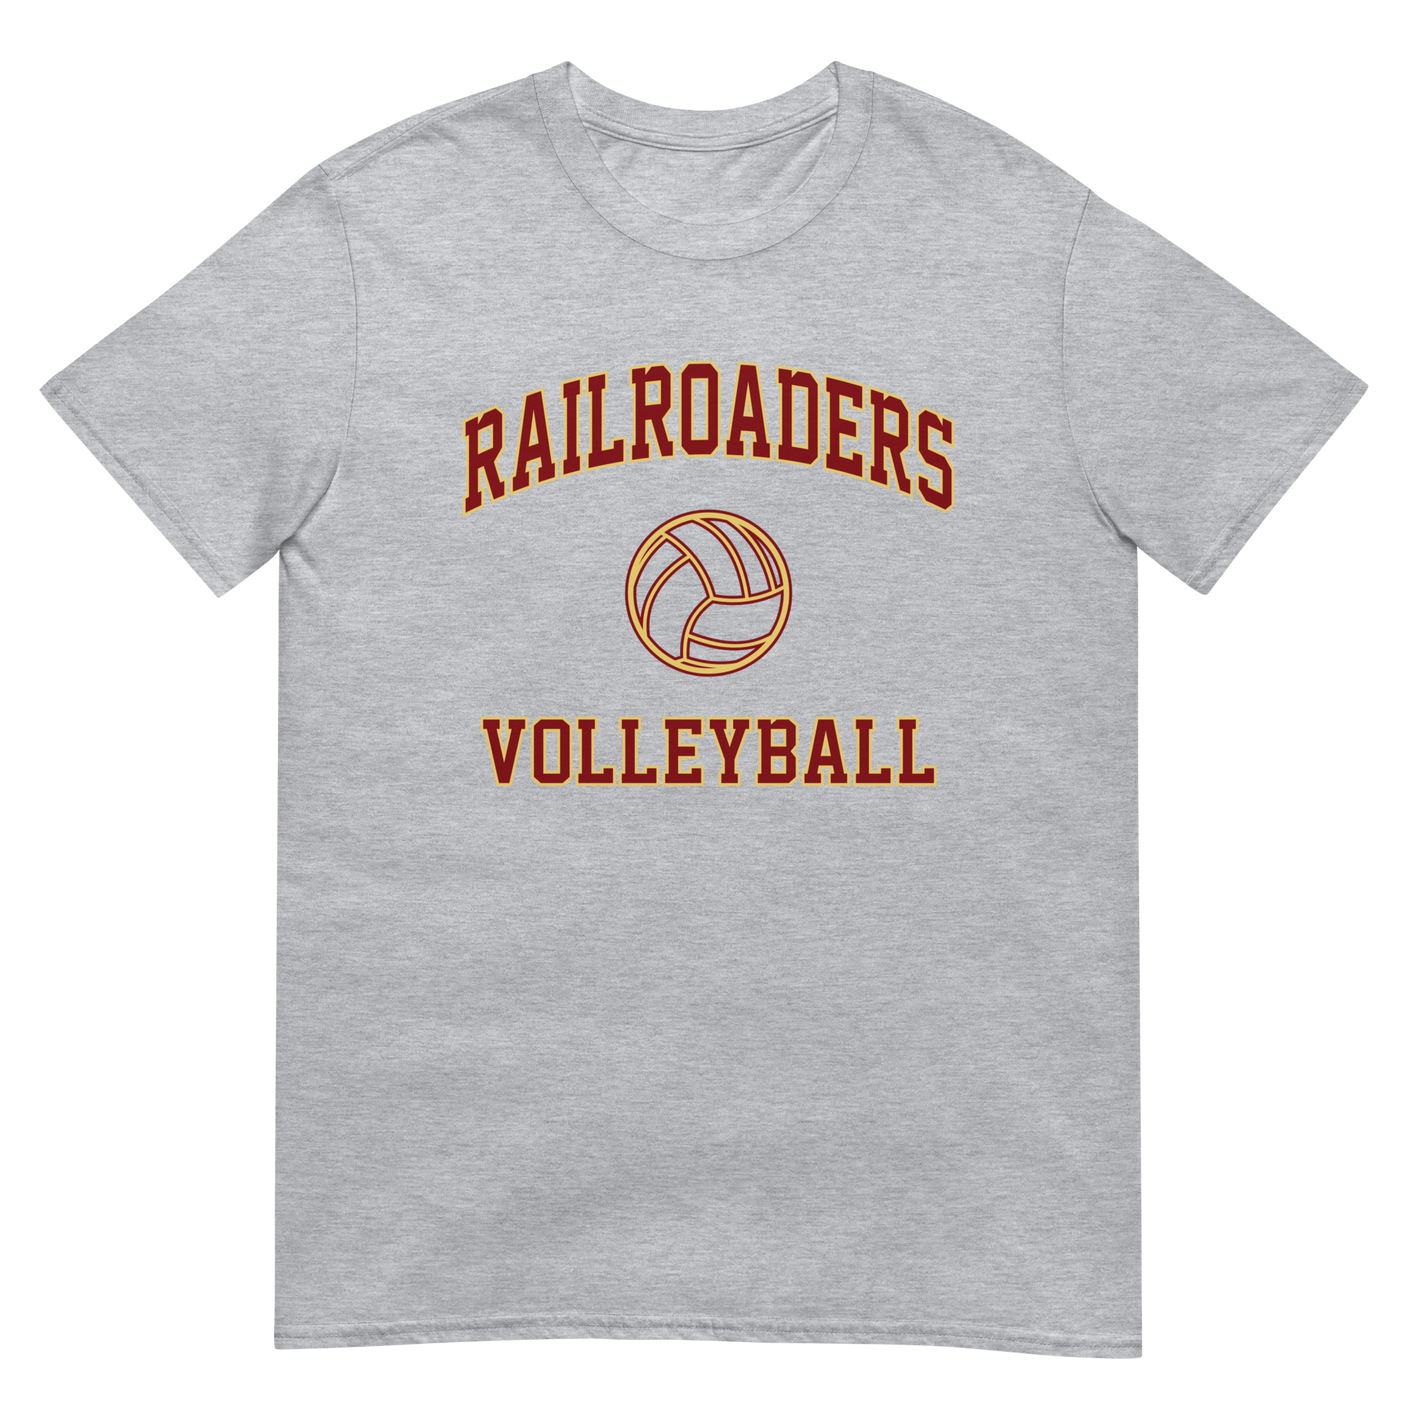 Railroaders Volleyball Short-Sleeve Unisex T-Shirt